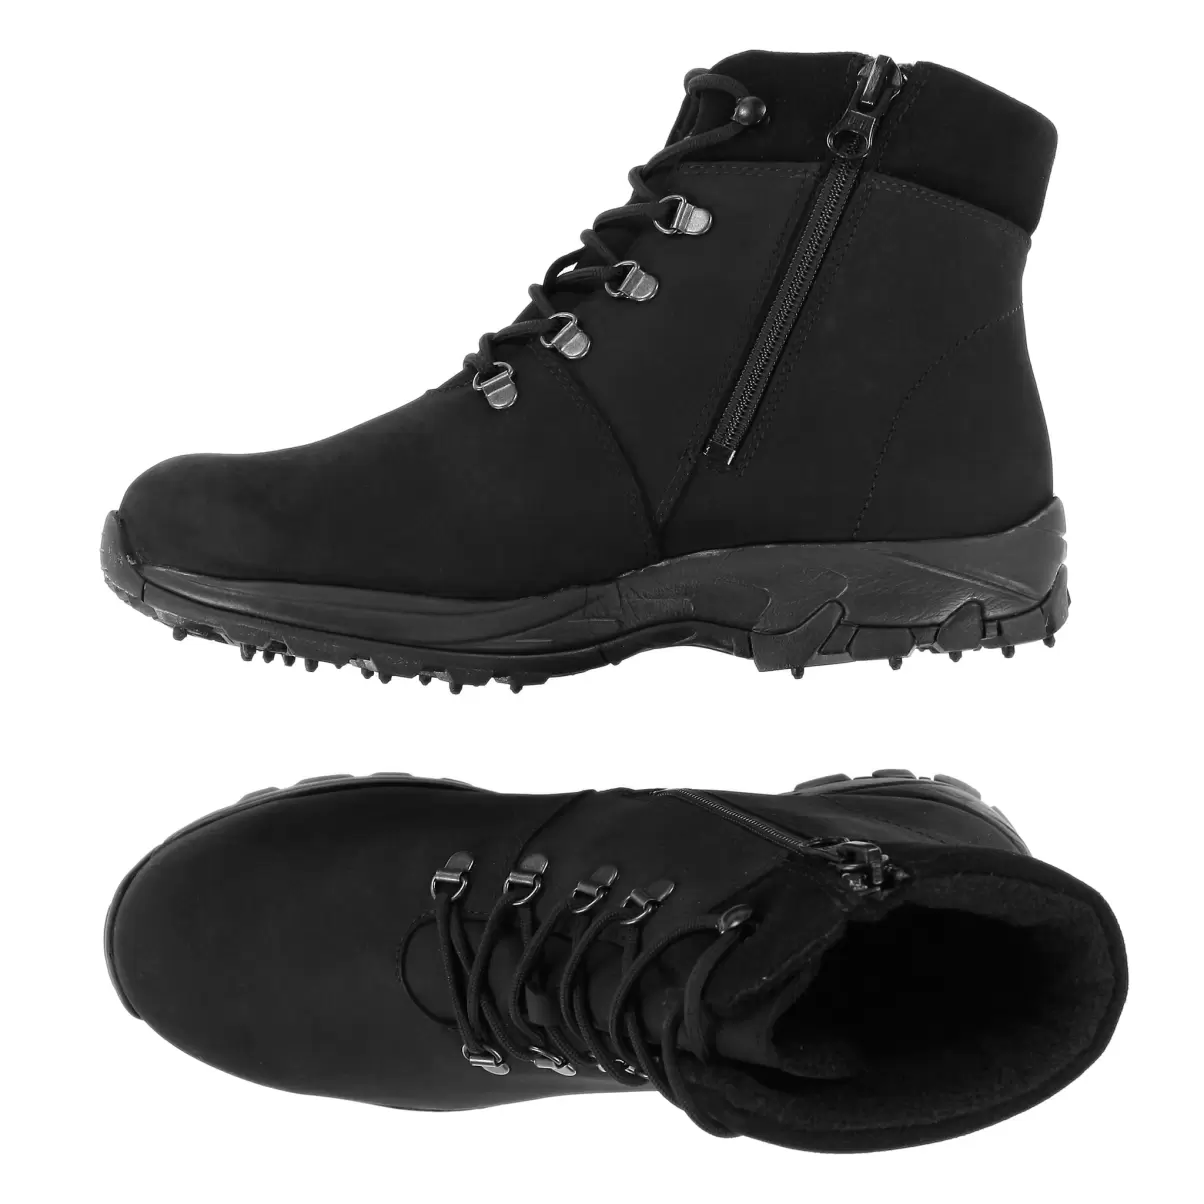 Men Winter Boots Kokko Men's Pomar+ Gore-Tex Spike Winter Boots Pomarfin Oy Black Waxy/Partel.l/Spike Sole - 3